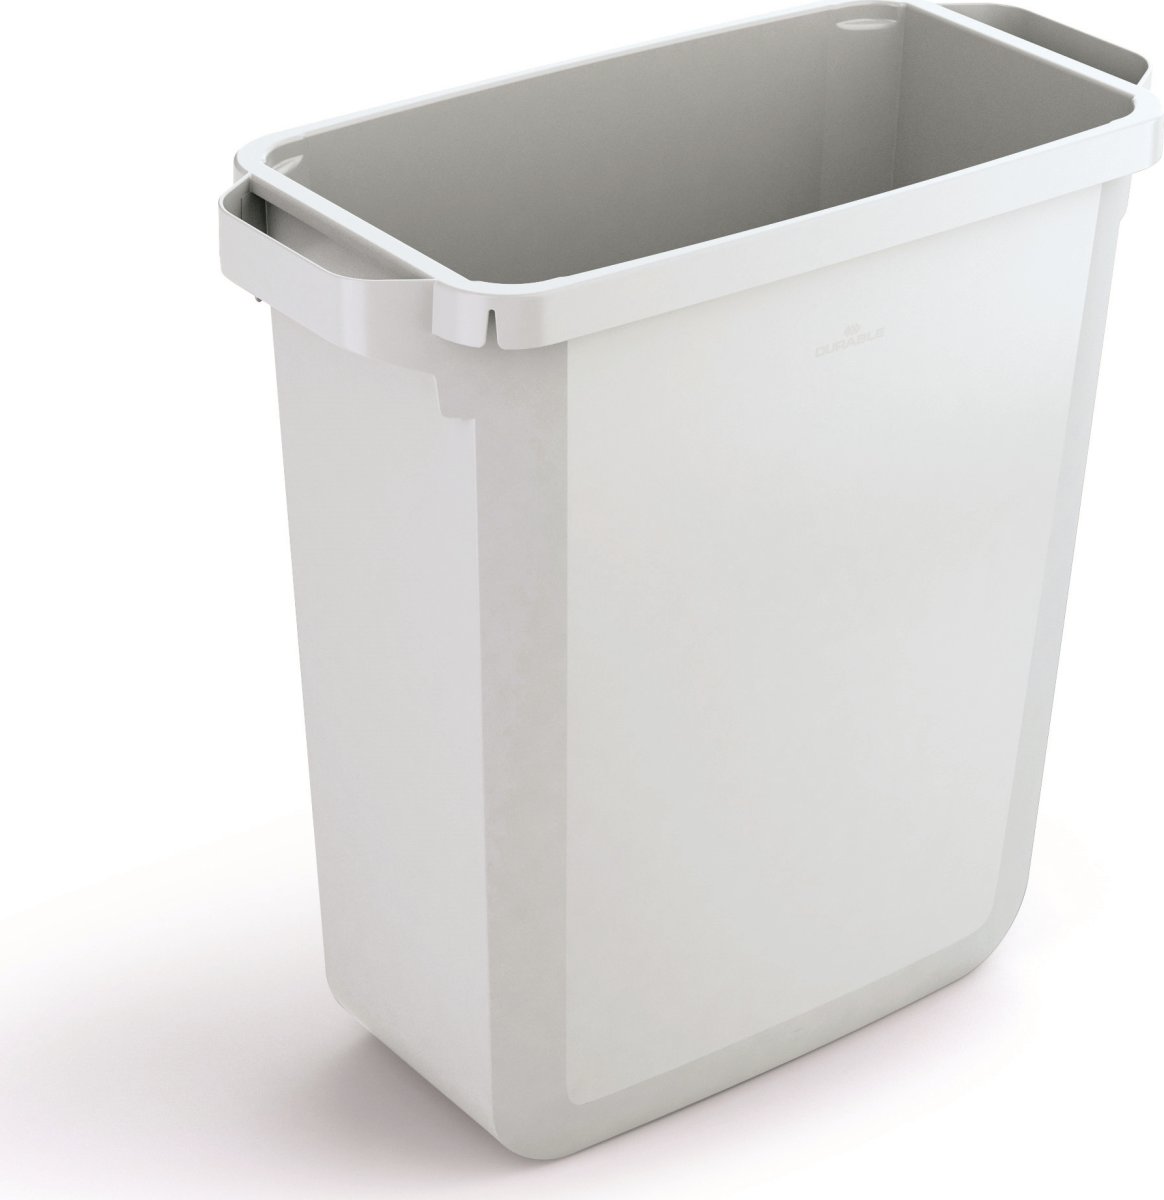 Durable Durabin affaldsspand 60 L, Hvid